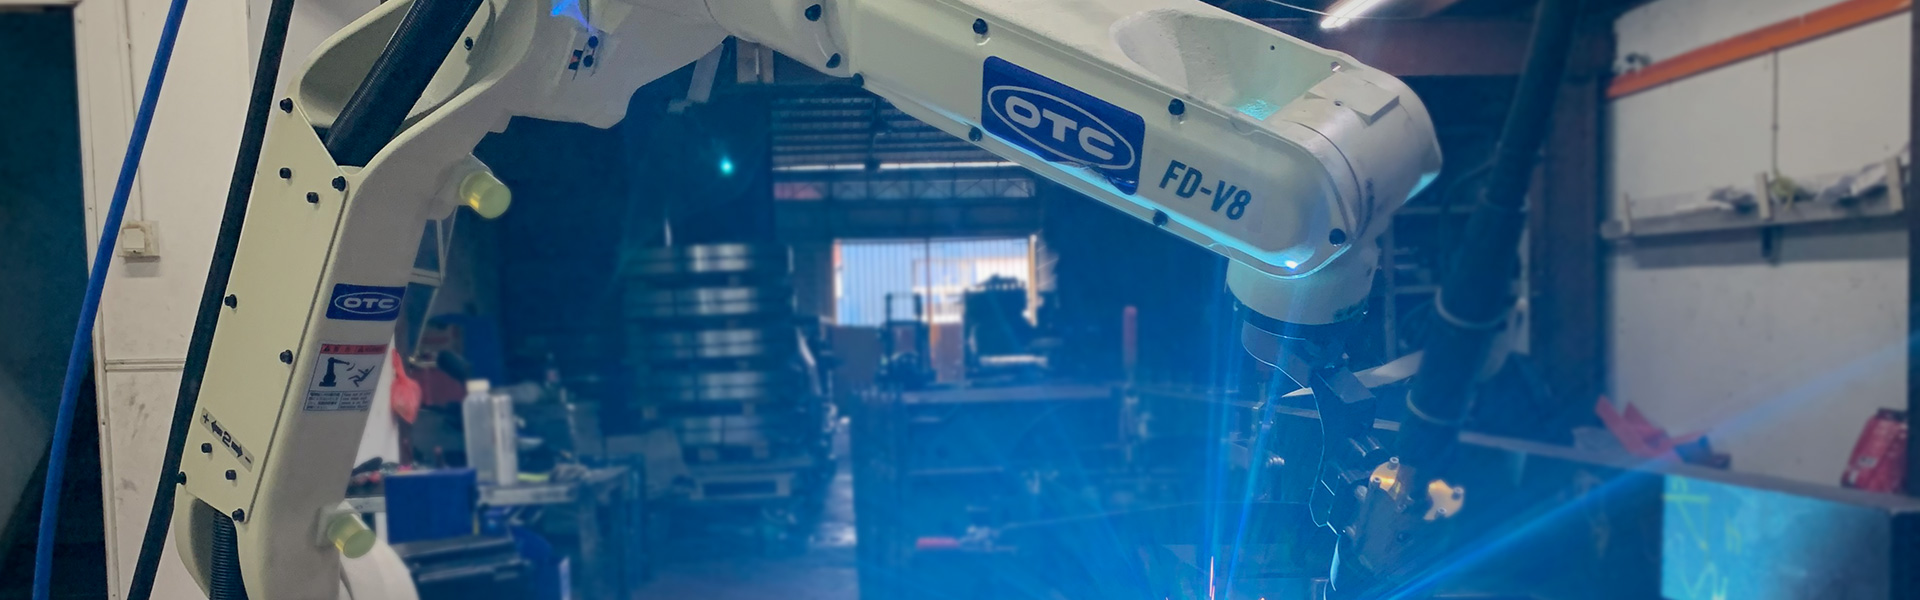 OTC Robot Welding